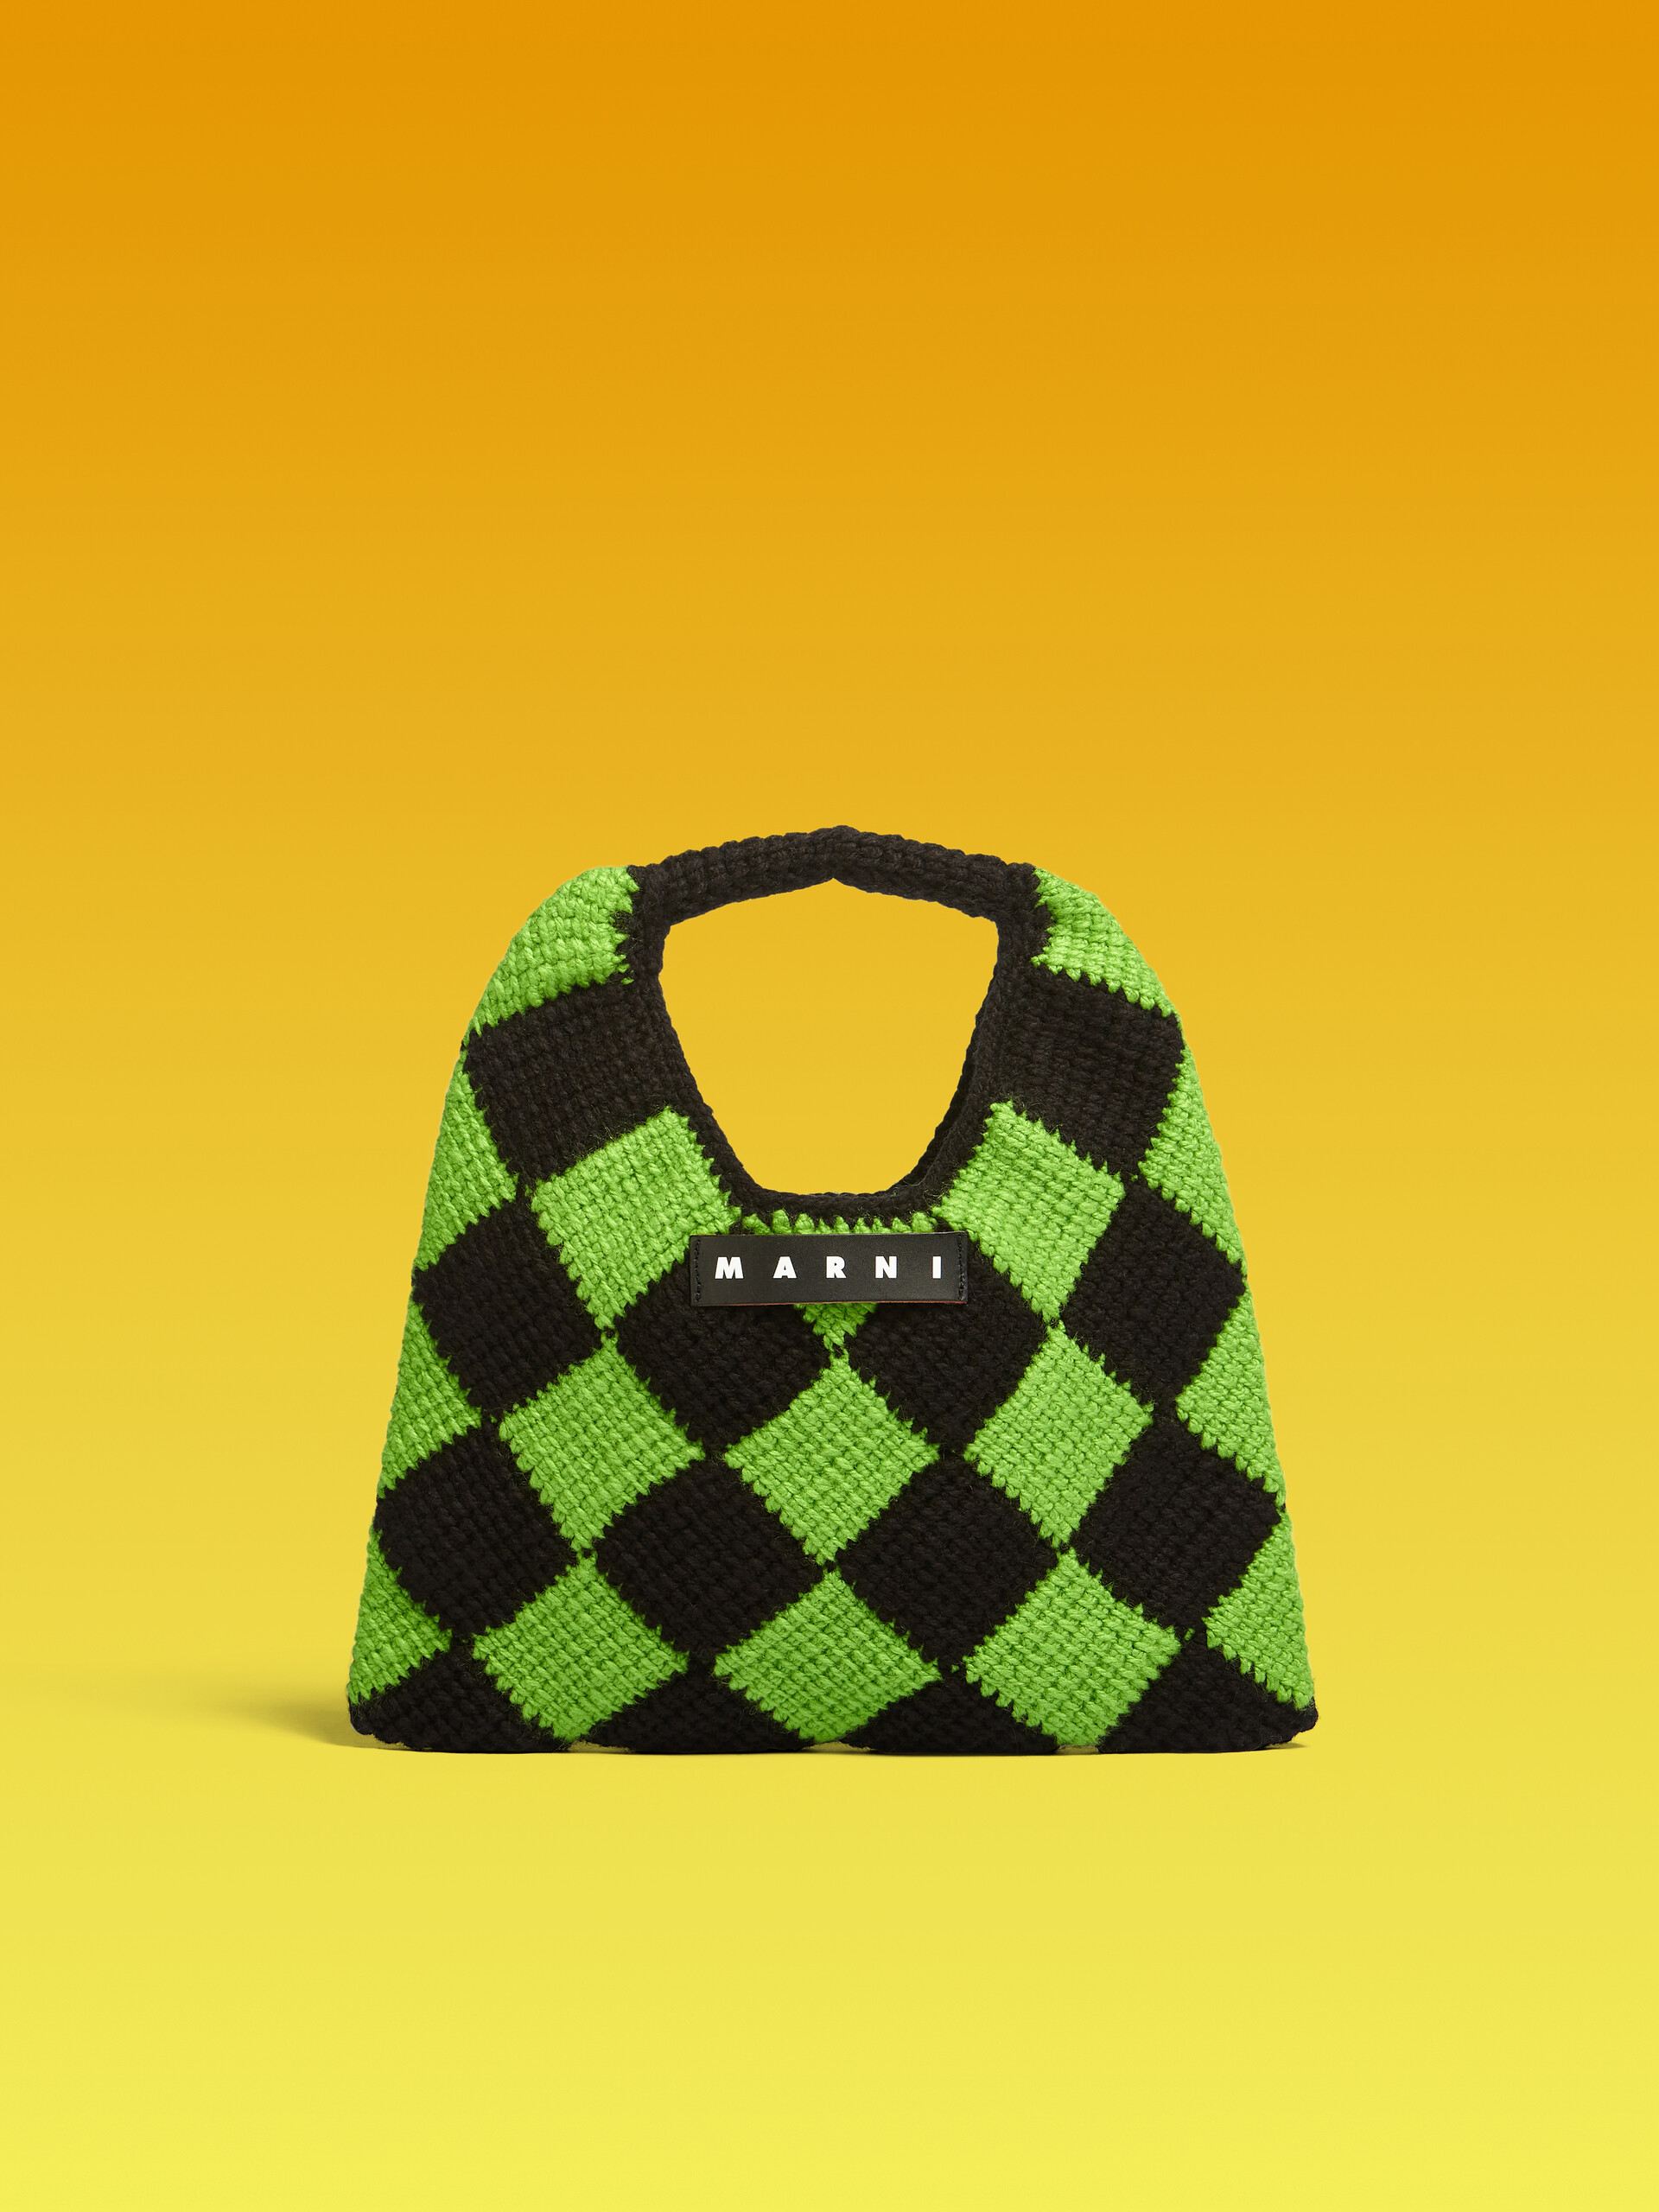 MARNI MARKET DIAMOND medium bag in green and black tech wool - Bags - Image 1